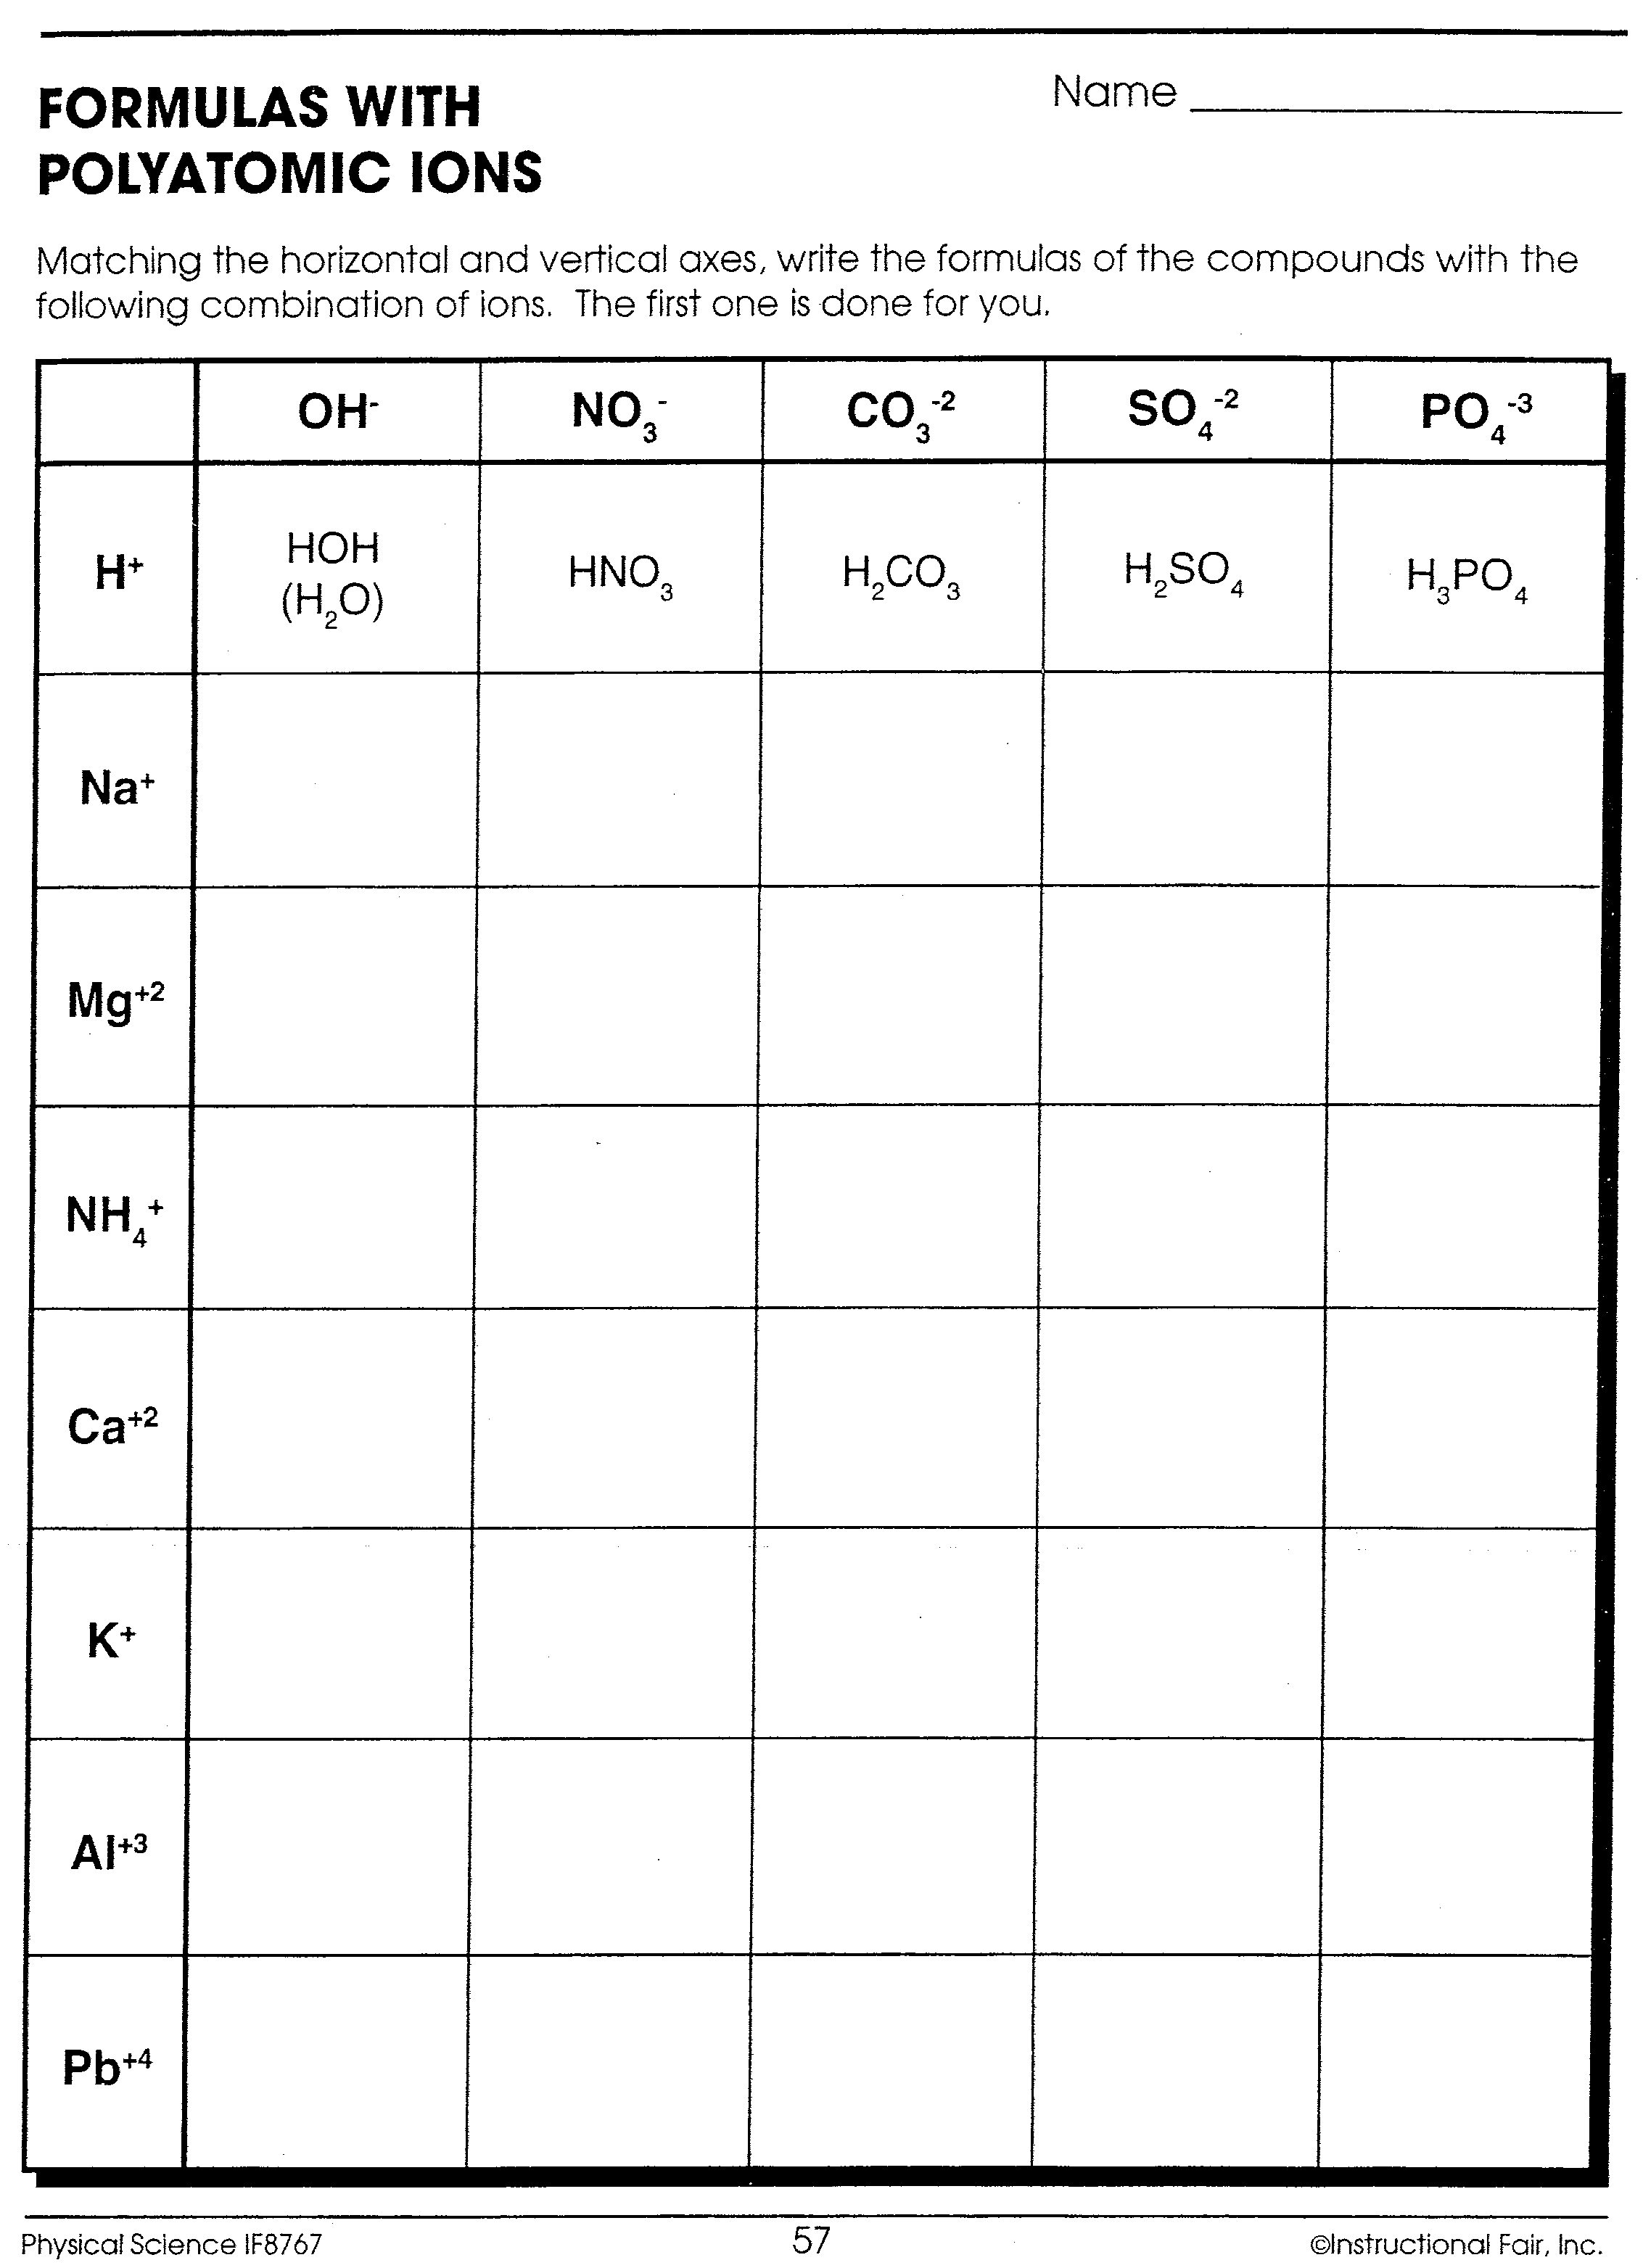 formulas-with-polyatomic-ions-worksheet